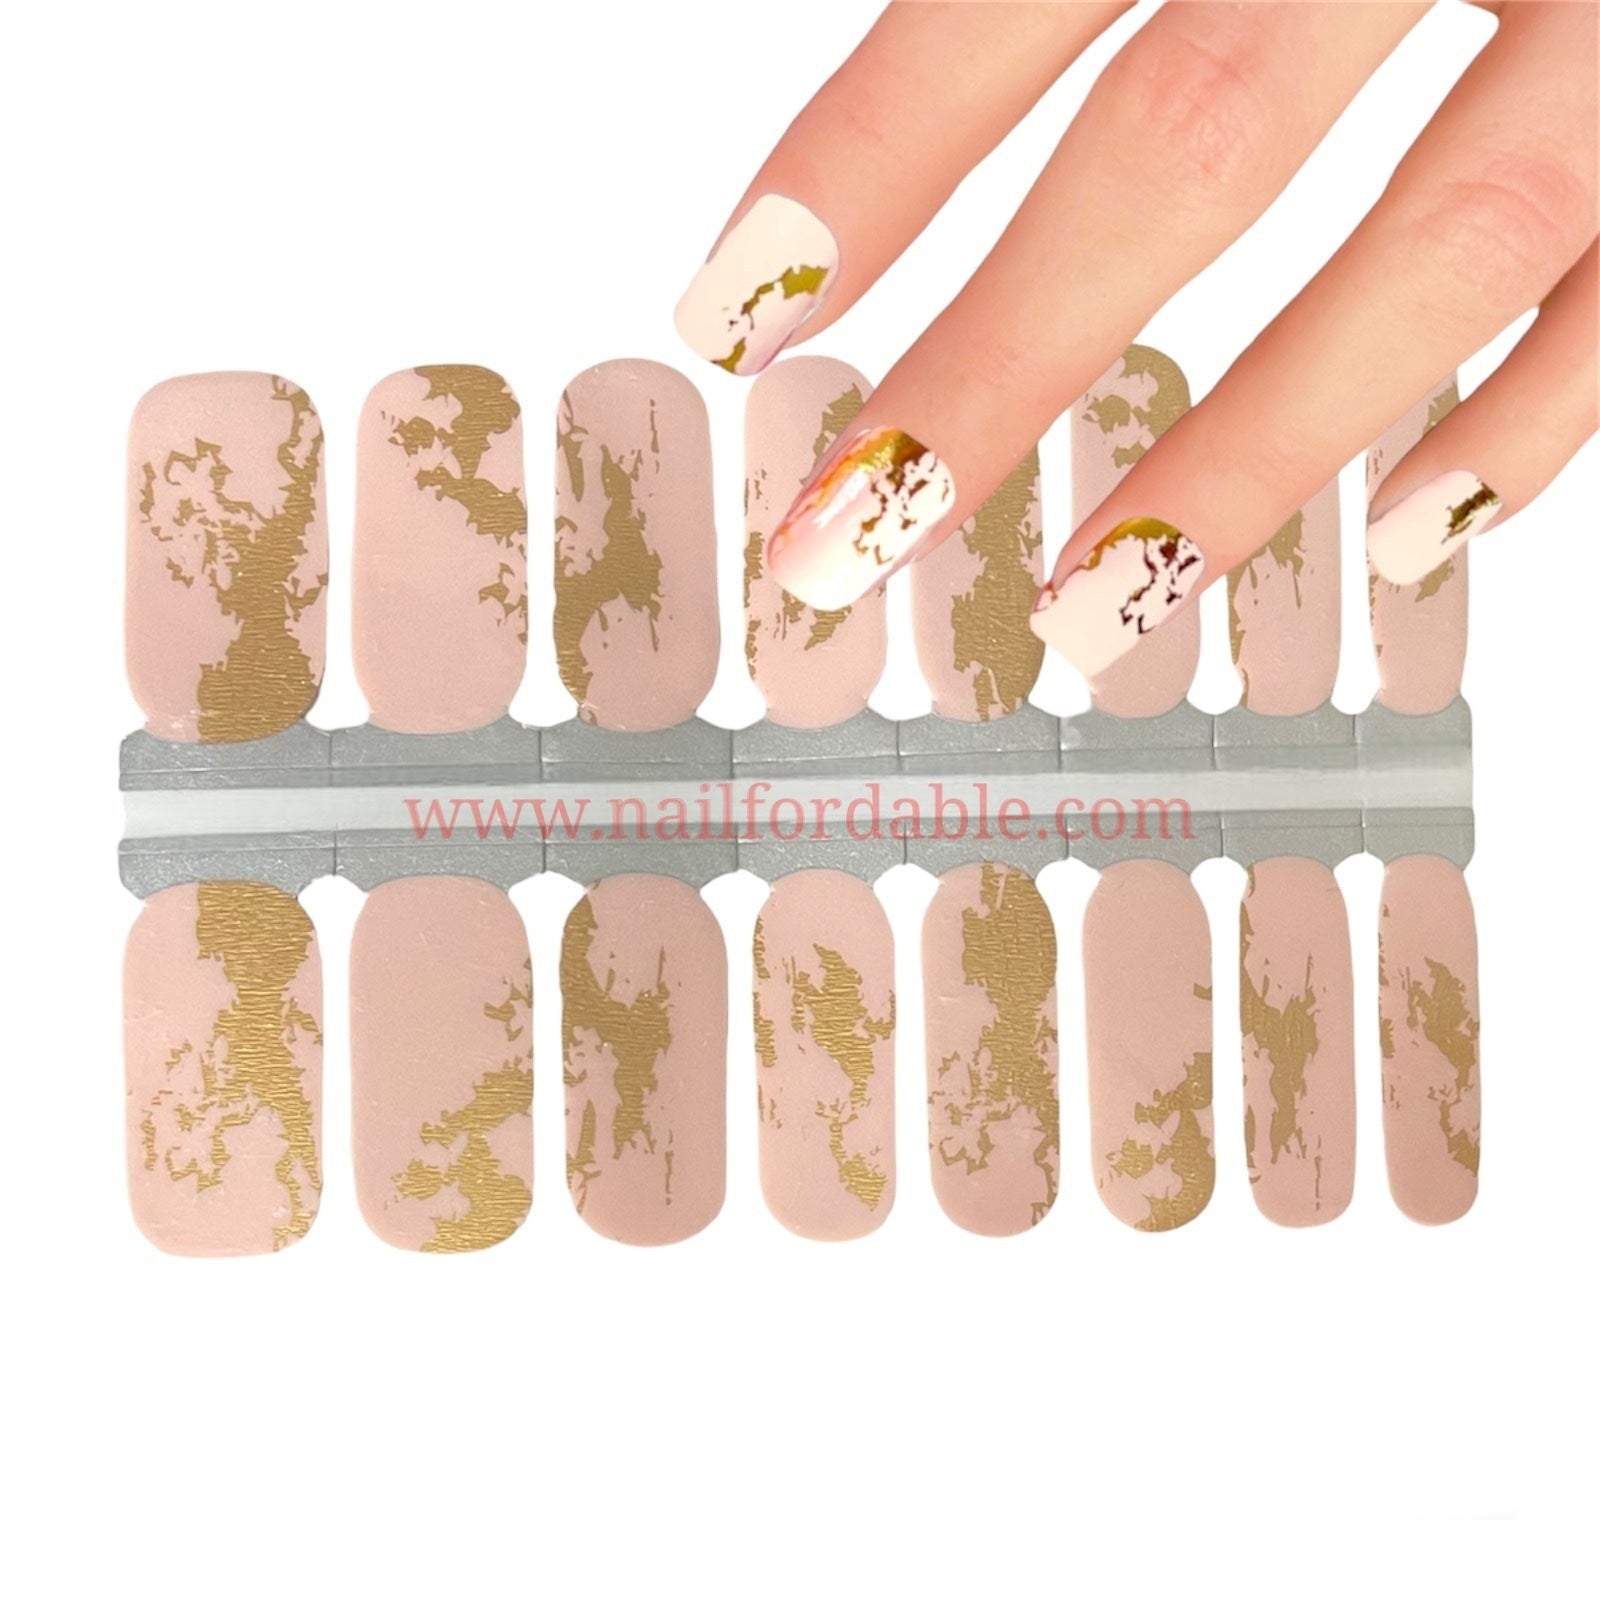 Gold lakes Nail Wraps | Semi Cured Gel Wraps | Gel Nail Wraps |Nail Polish | Nail Stickers